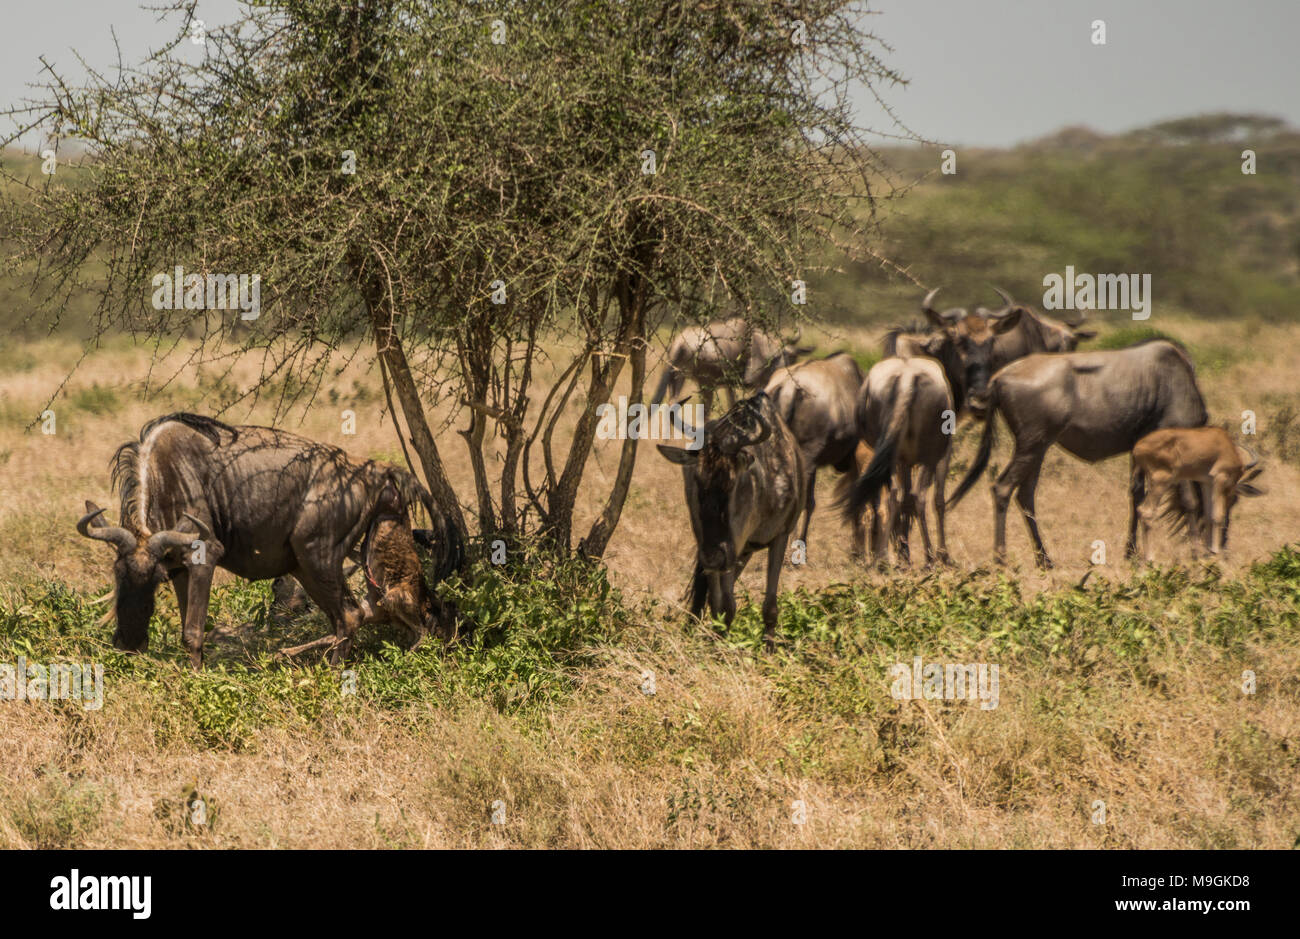 African wildlife in the Serengeti National Park, Tanzania. Stock Photo